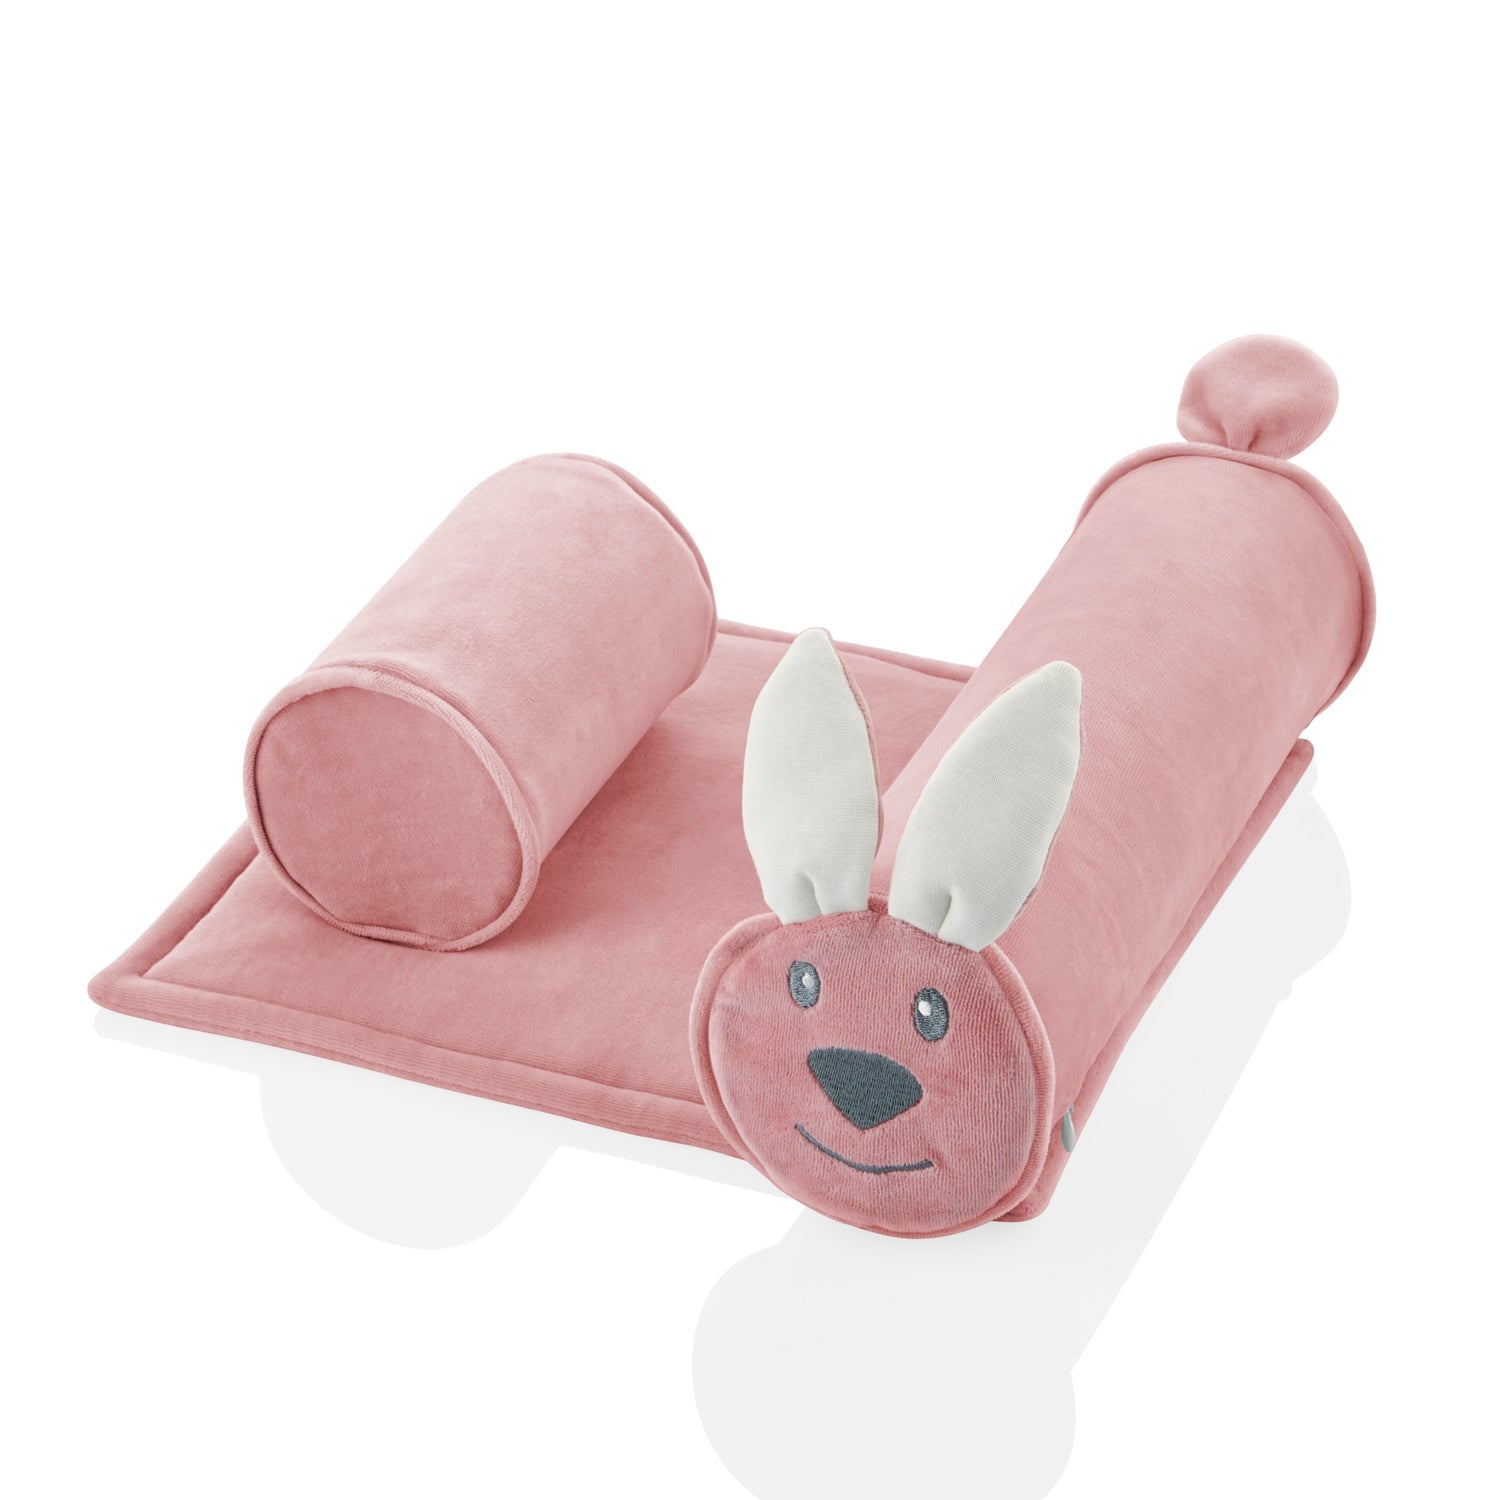 Babyjem - Pink Side Sleep Pillow With Rabbit